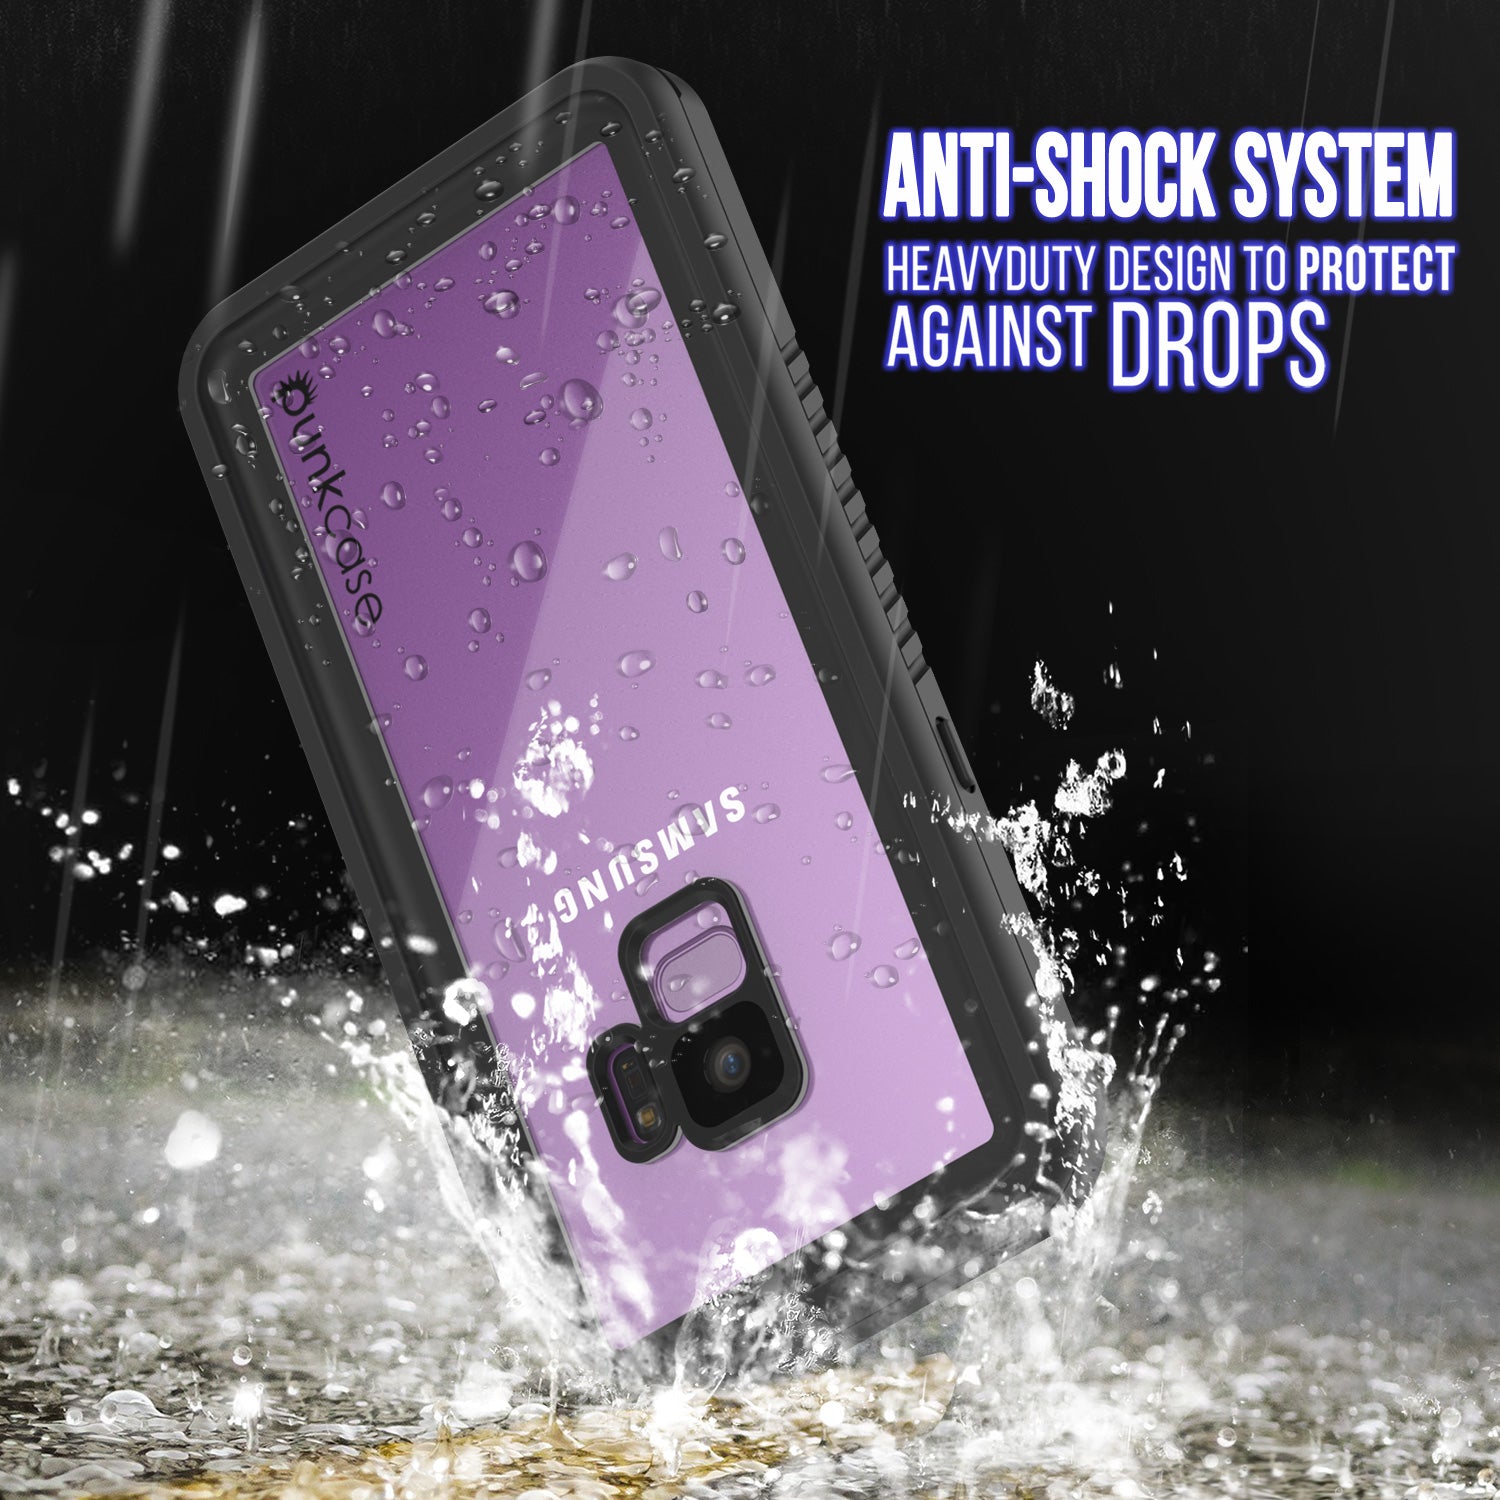 Galaxy S9 Waterproof Case, Punkcase [Extreme Series] [Slim Fit] [IP68 Certified] [Shockproof] [Snowproof] [Dirproof] Armor Cover [White] - PunkCase NZ